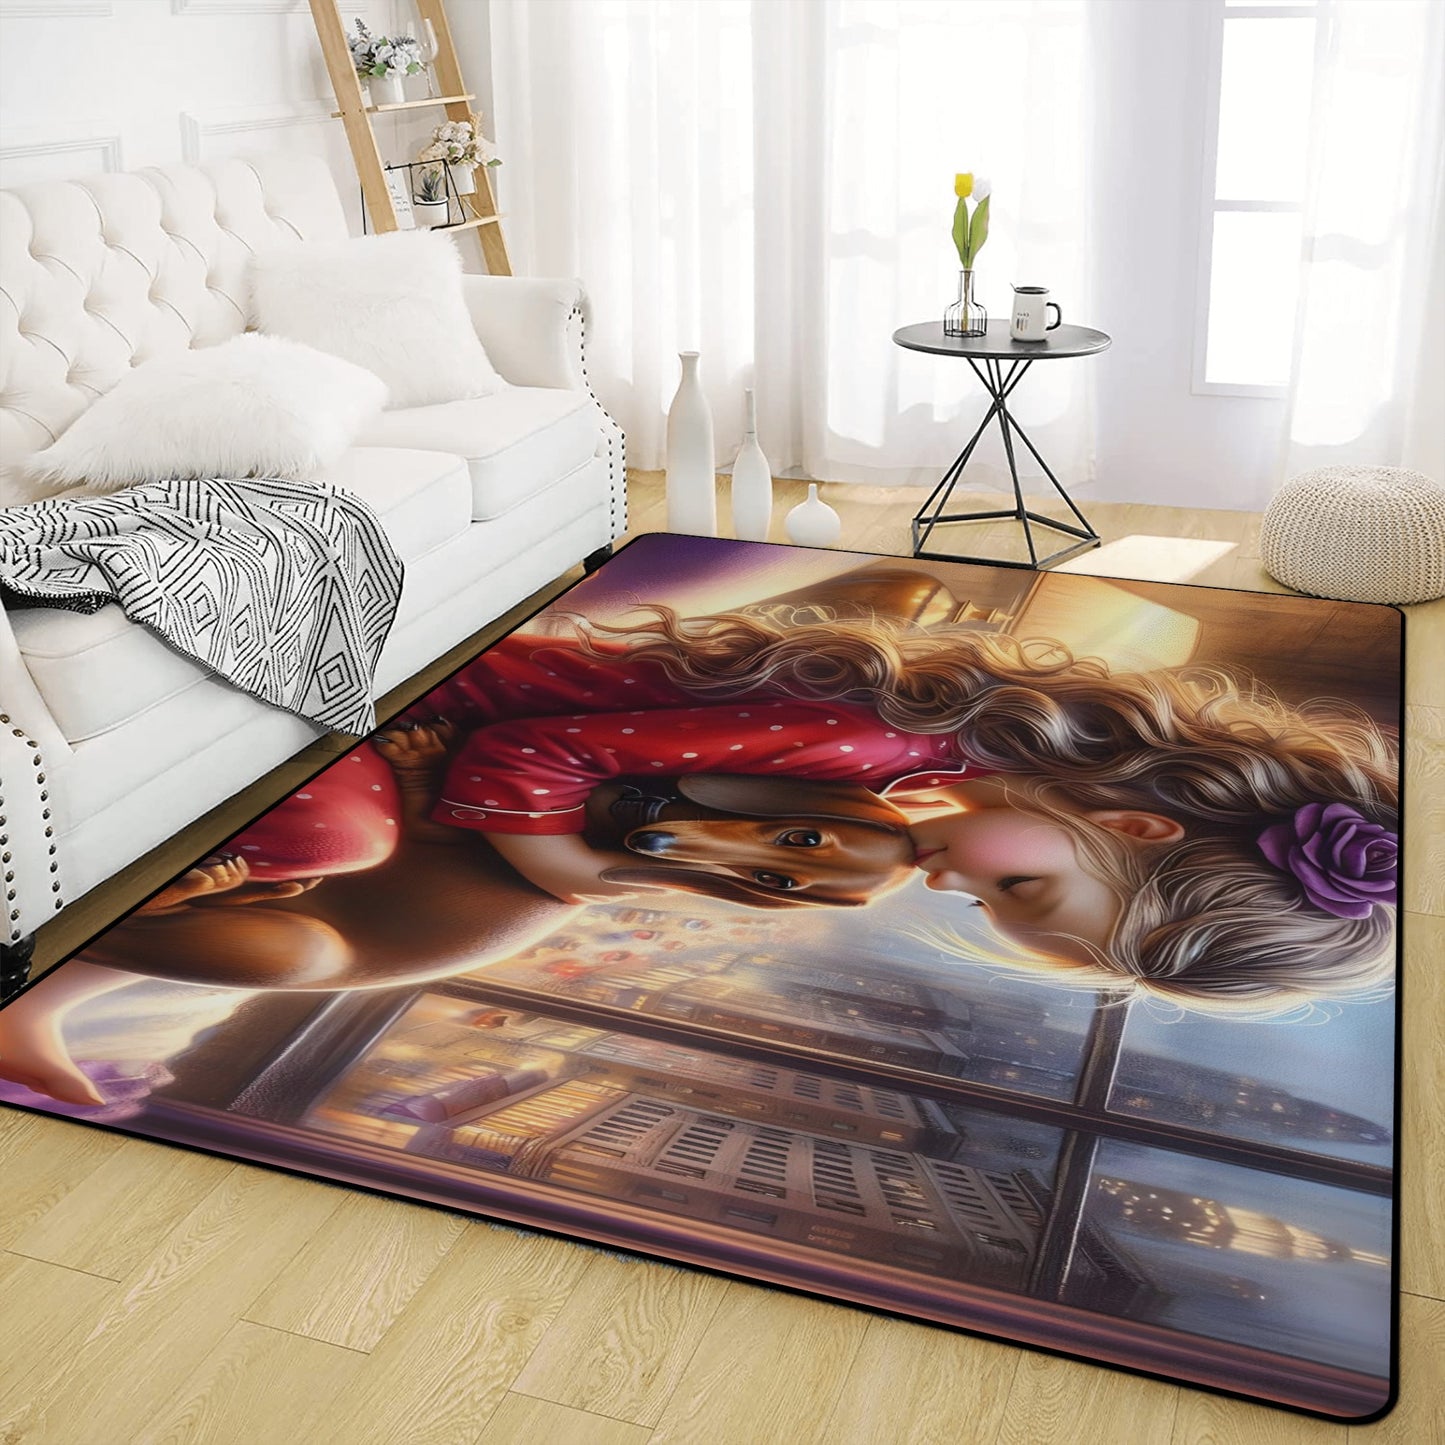 Benji - Living Room Carpet Rug